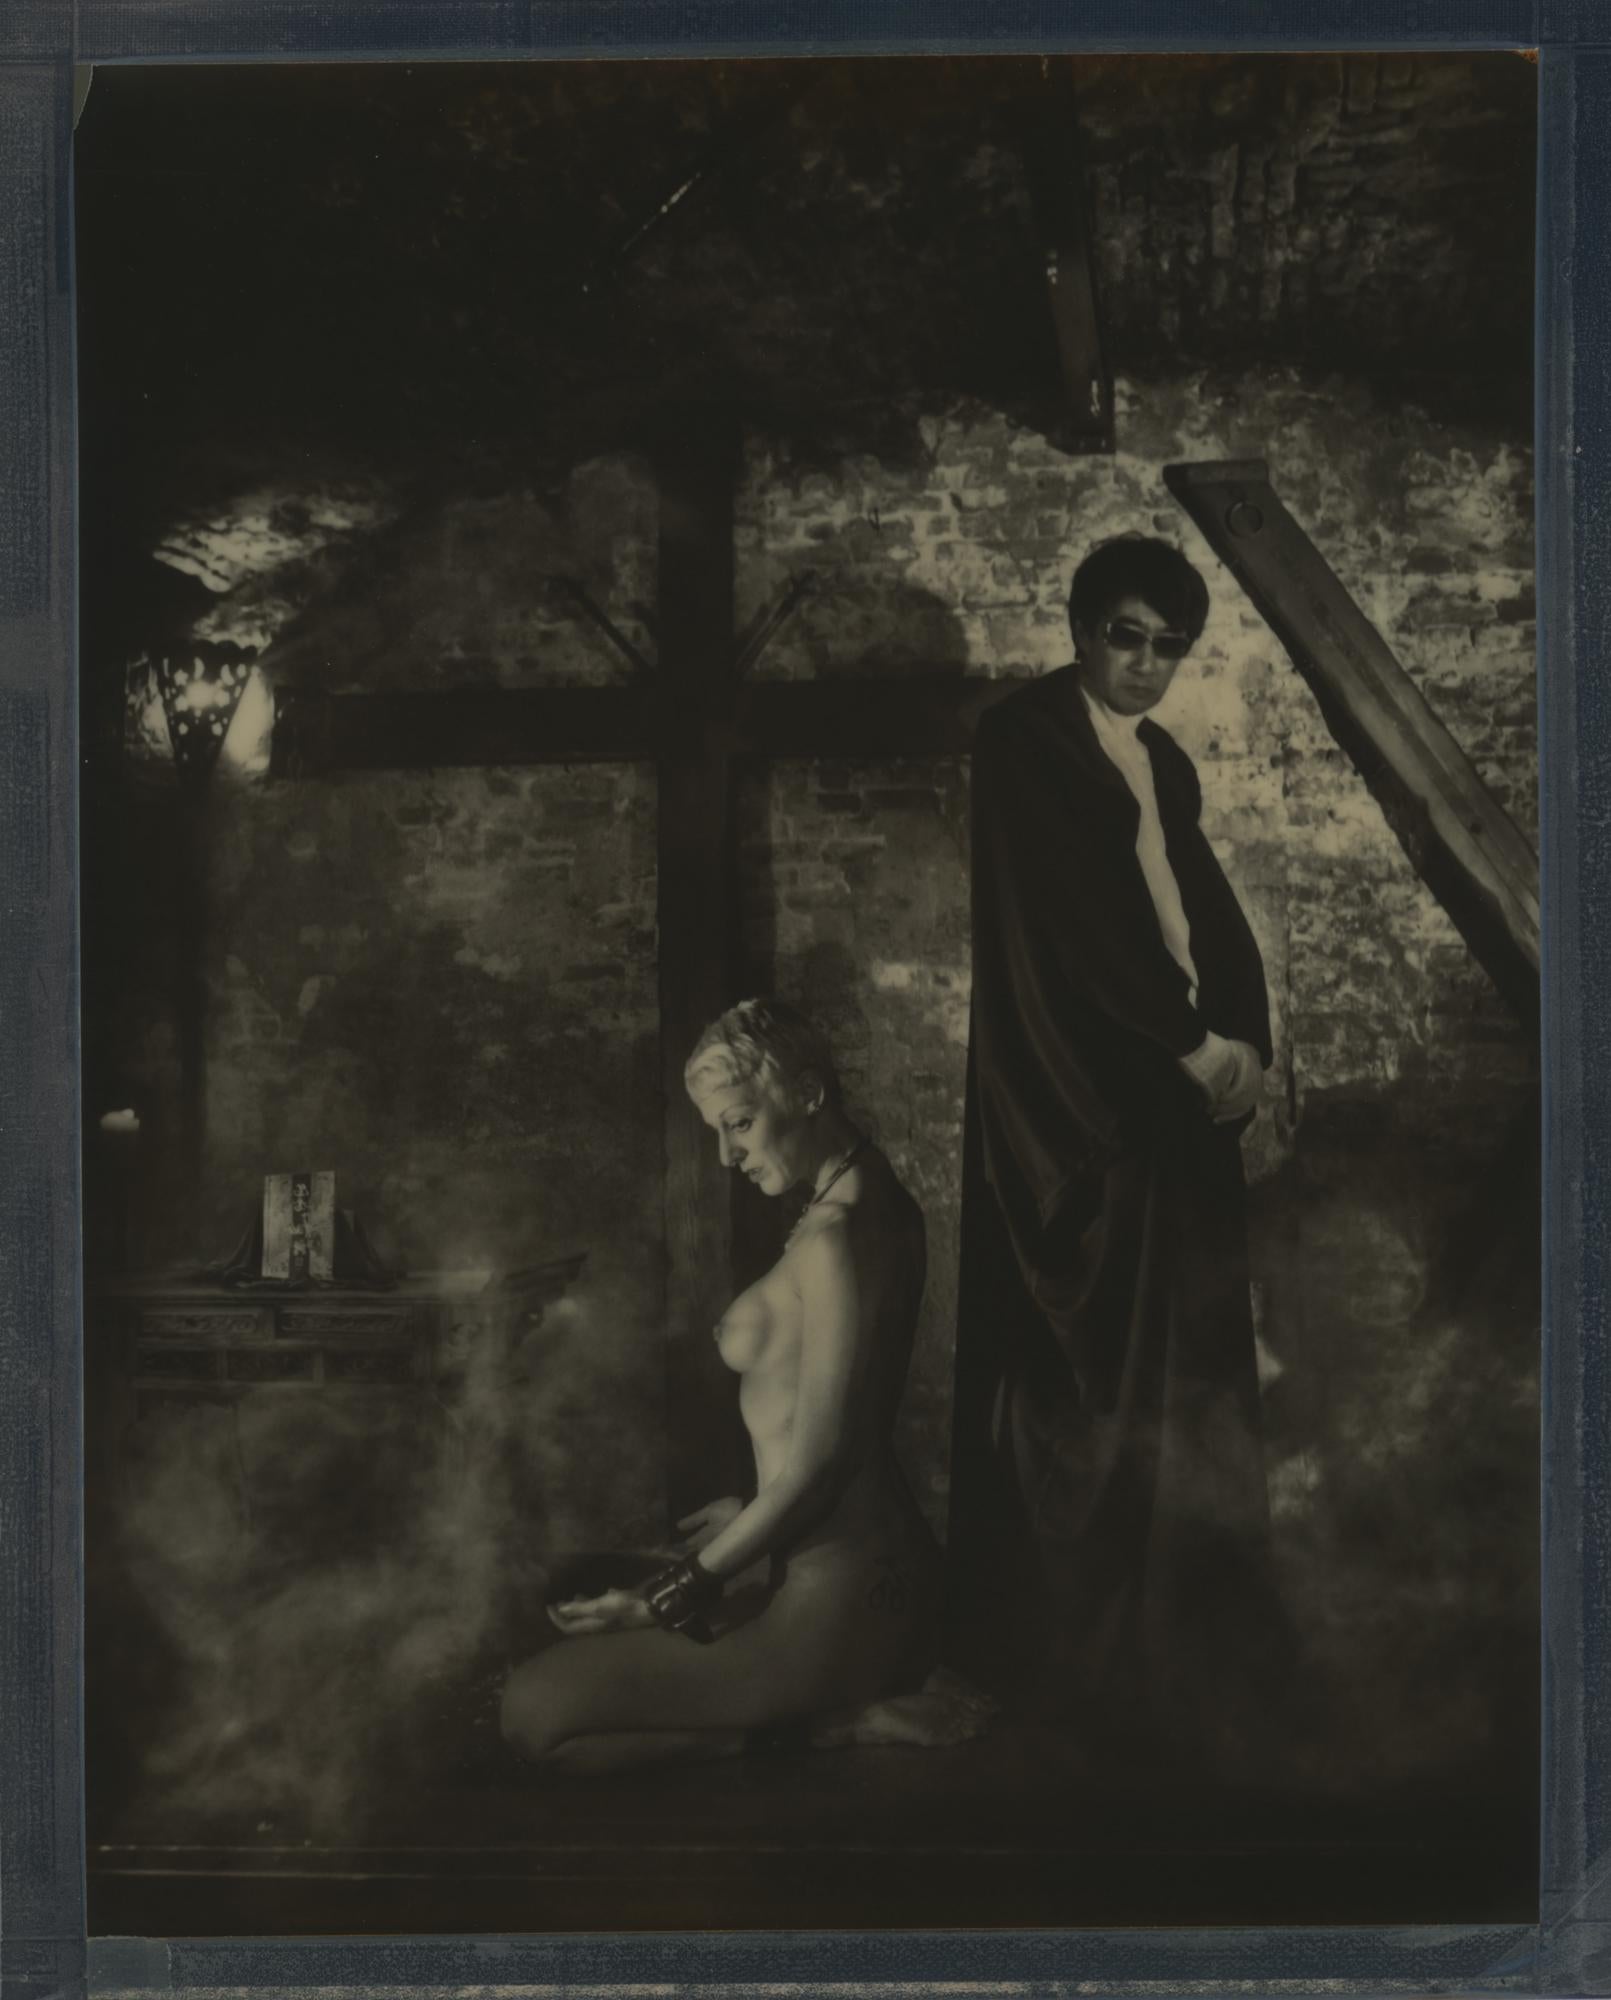 xulong zhang Nude Photograph - Untitled - Contemporary, 21st Century, Polaroid, Figurative Photography